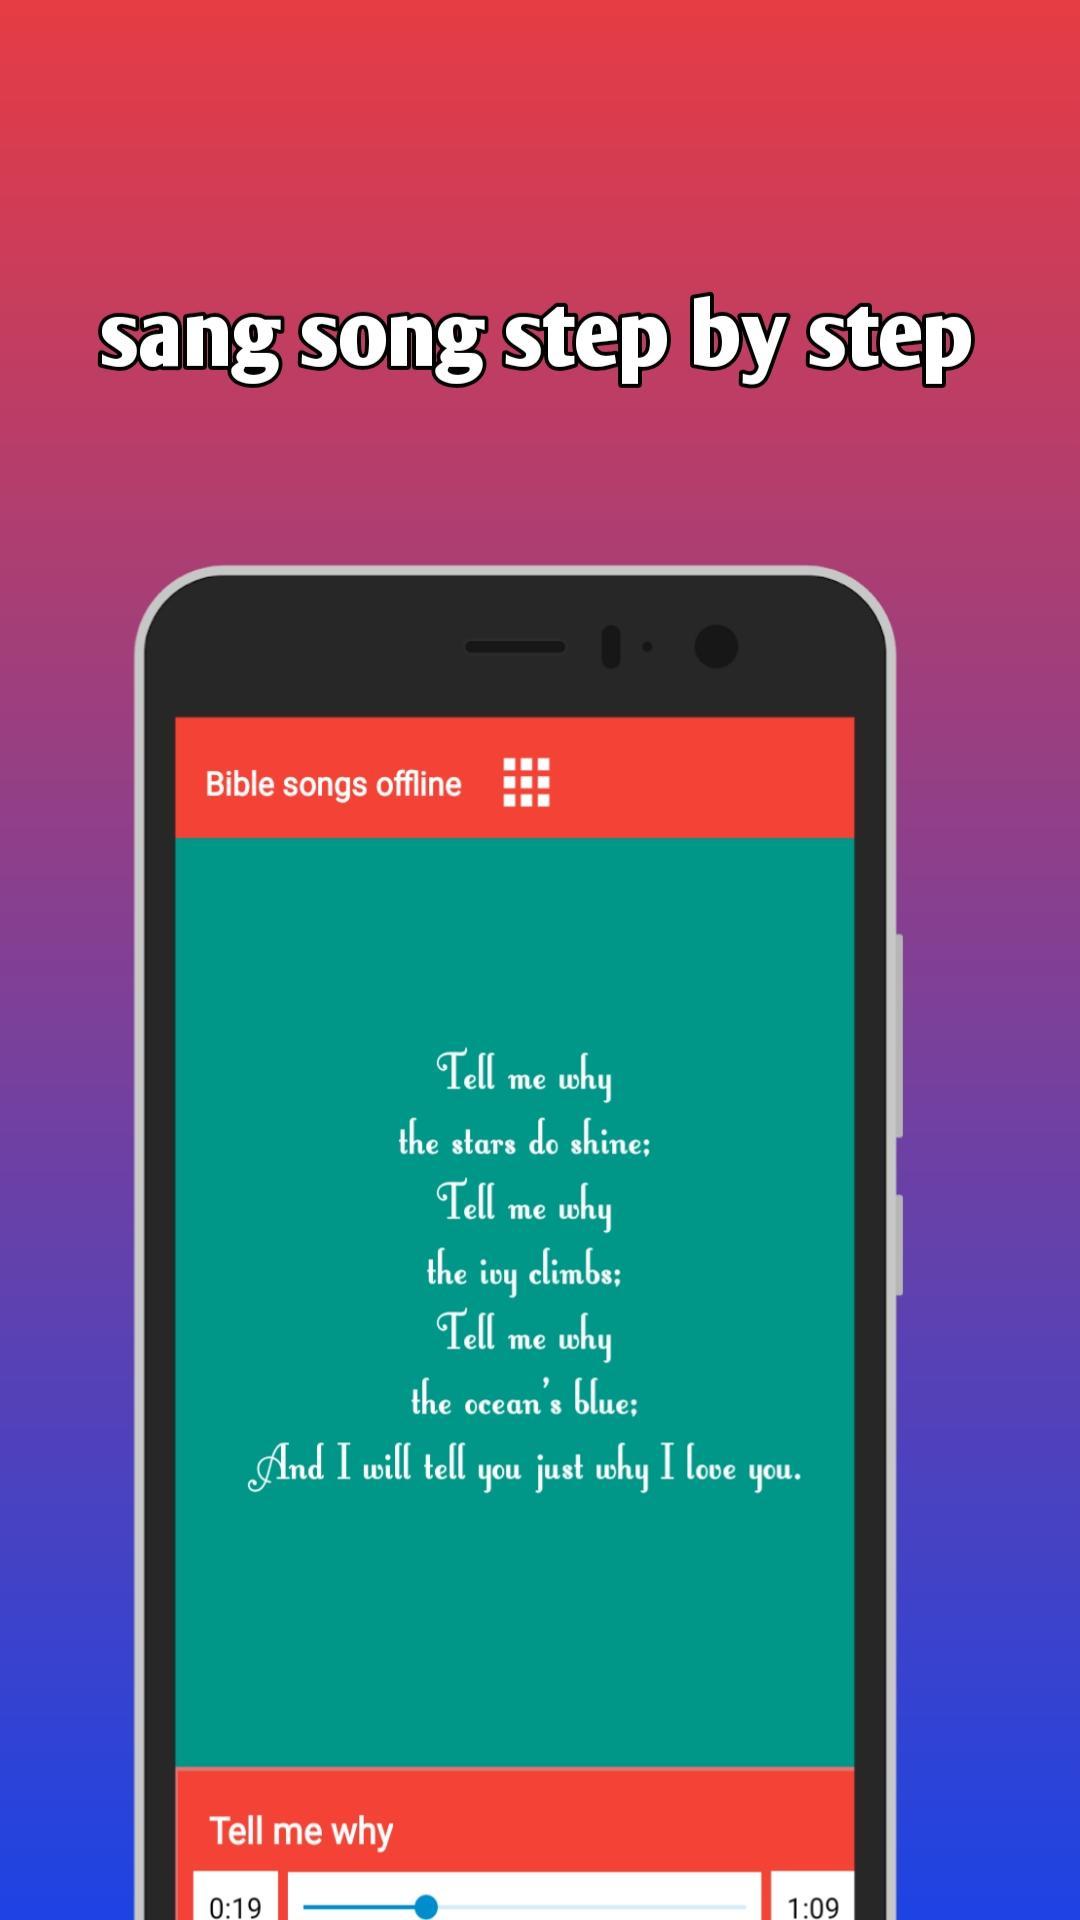 Bible songs offline with lyrics